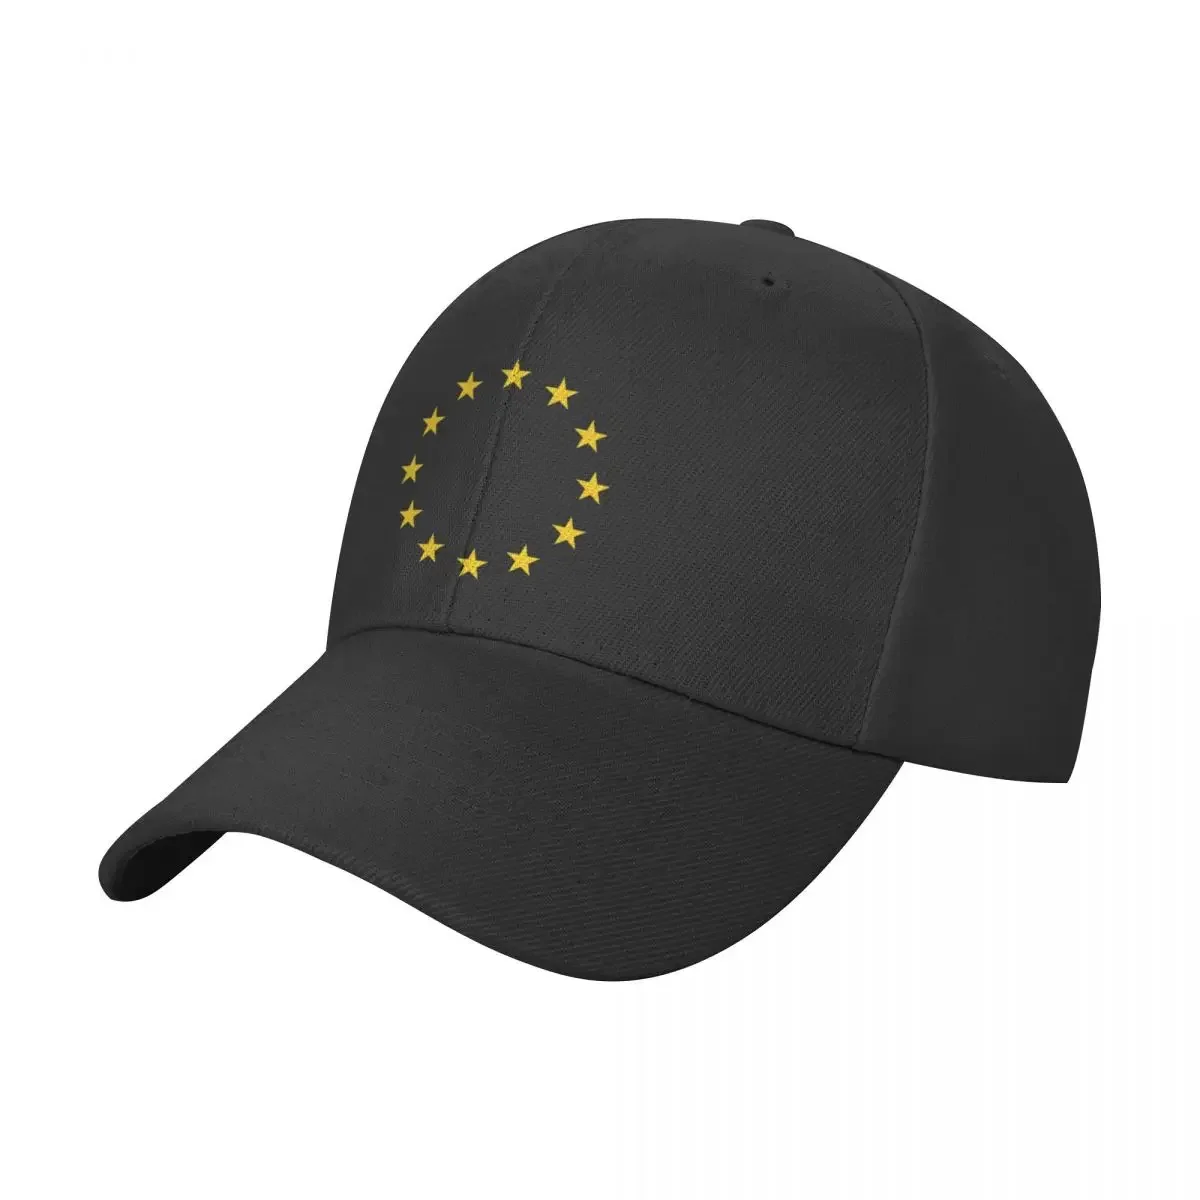 EU Europe European Union European flag EU stars Baseball Cap Golf Hat Man hiking hat New In The Hat Caps Women Men's european star baseball cap european union eu stars flag hat